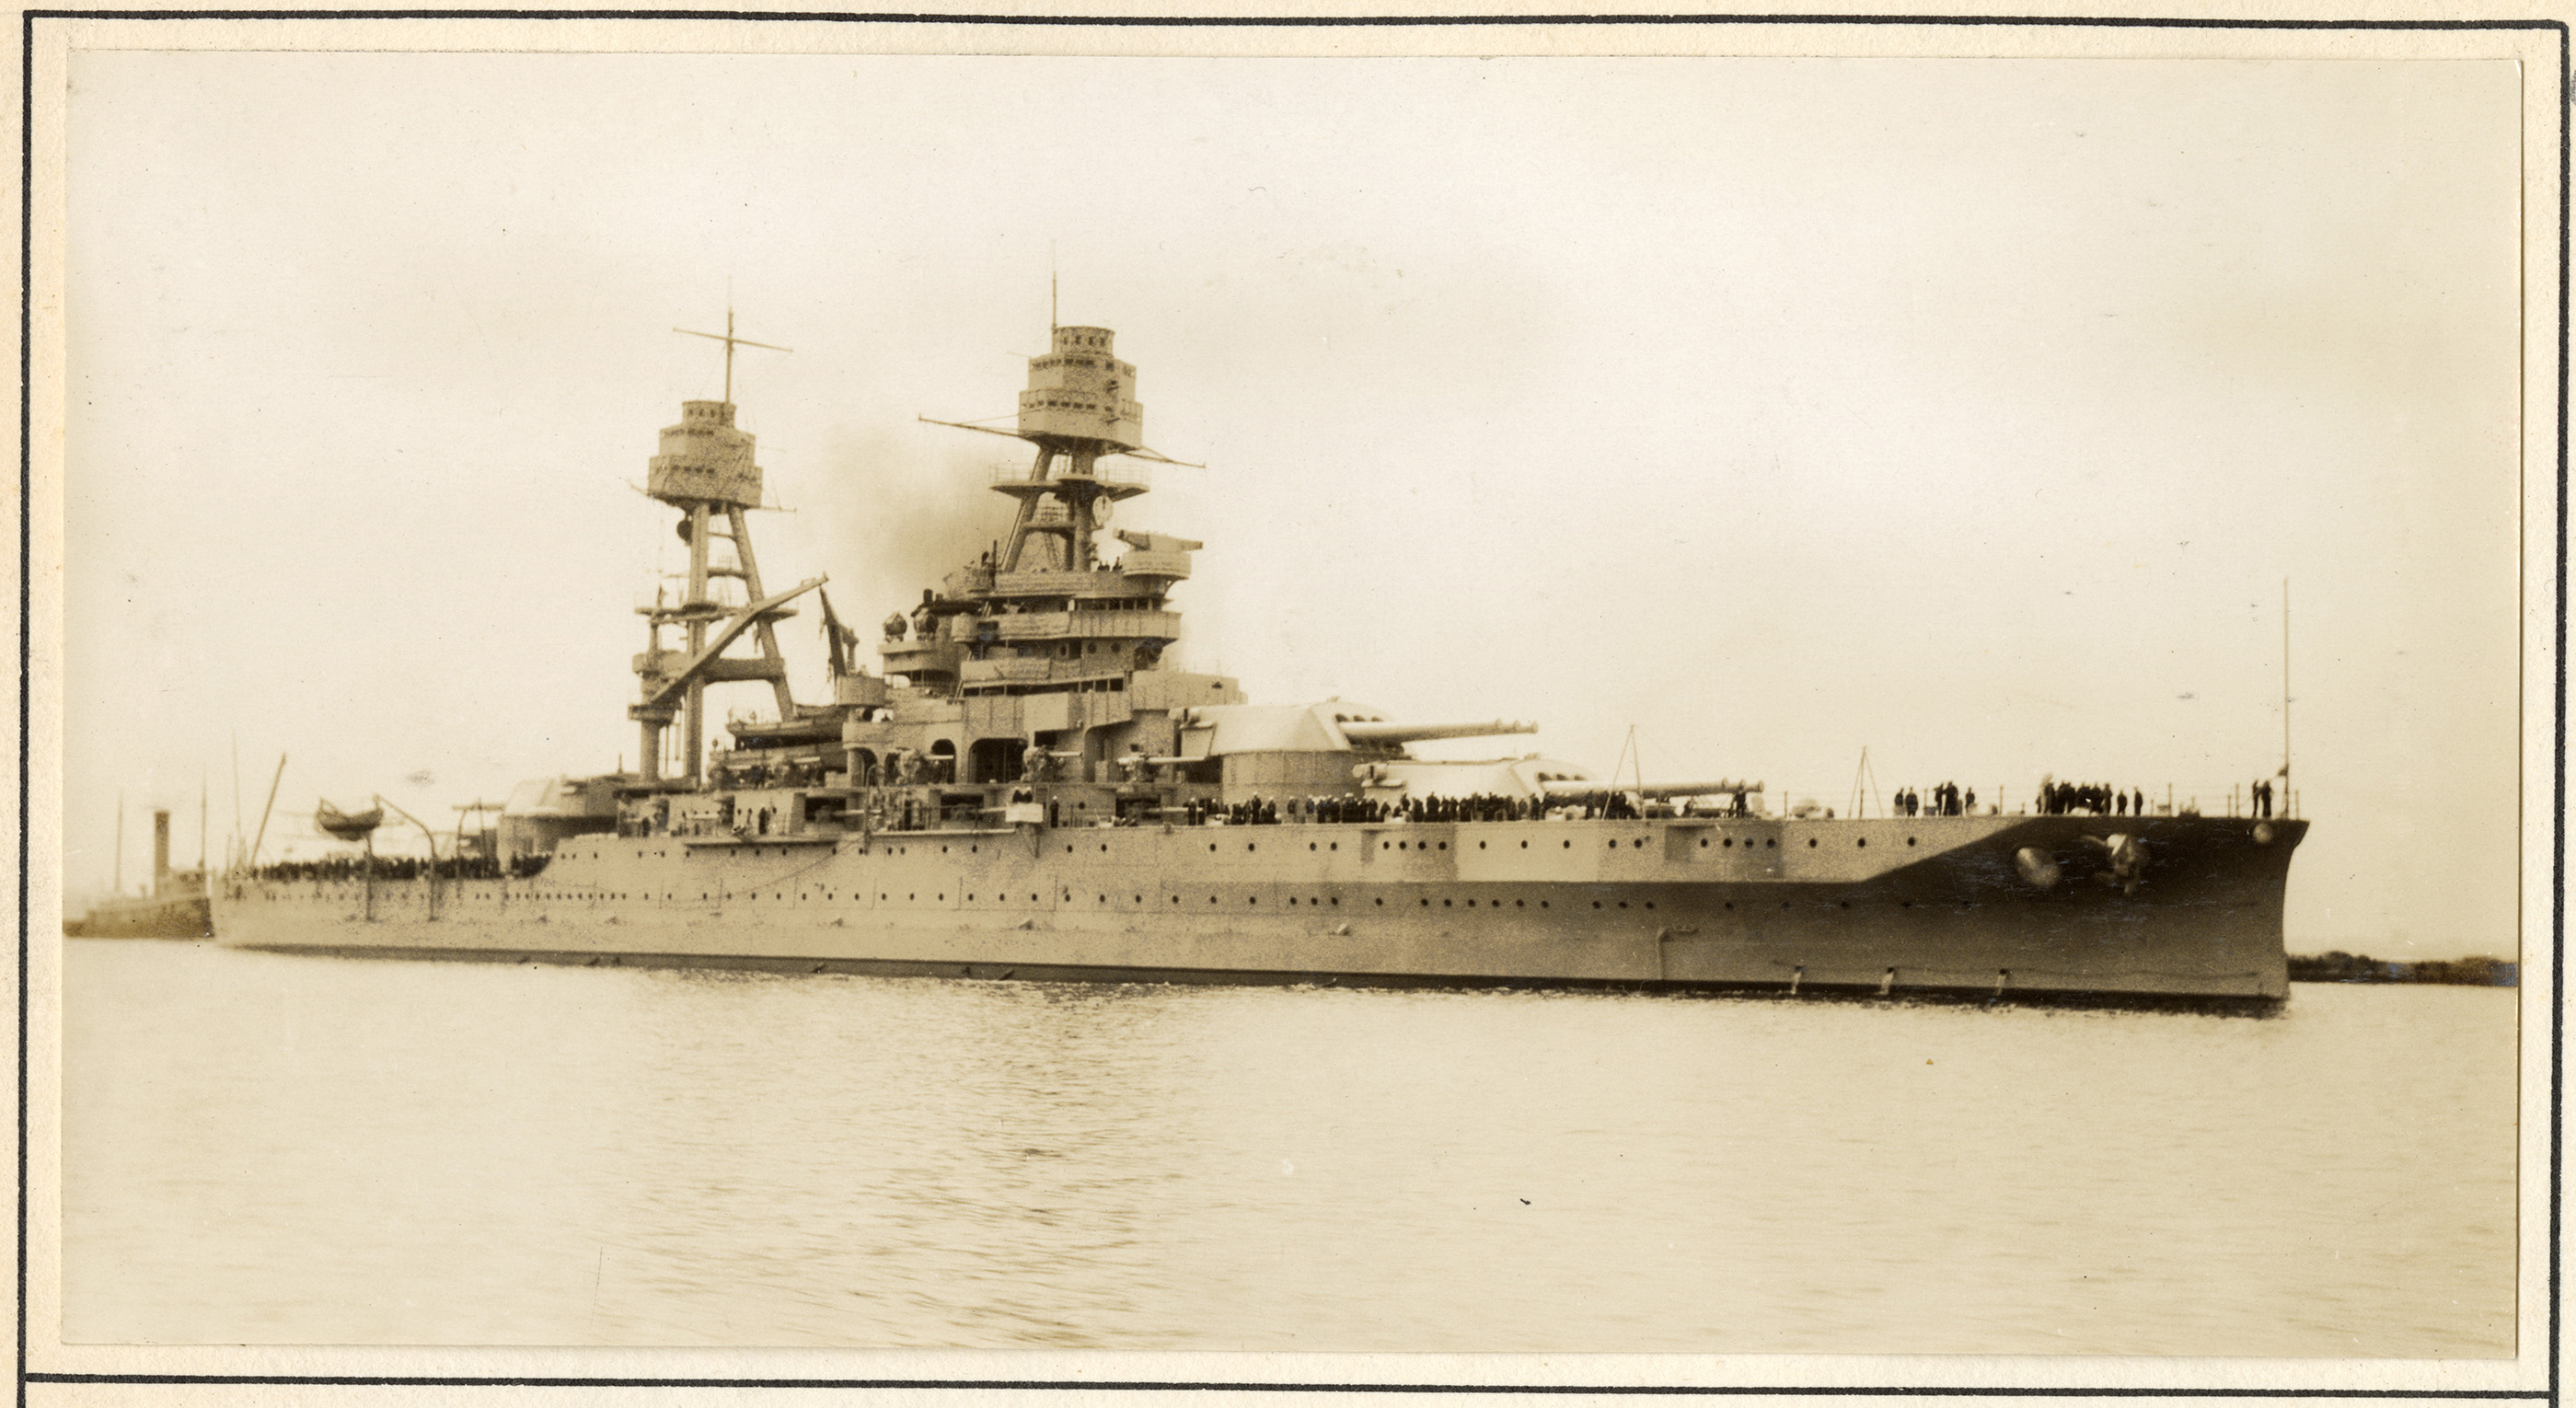 The Arizona battleship in calm water